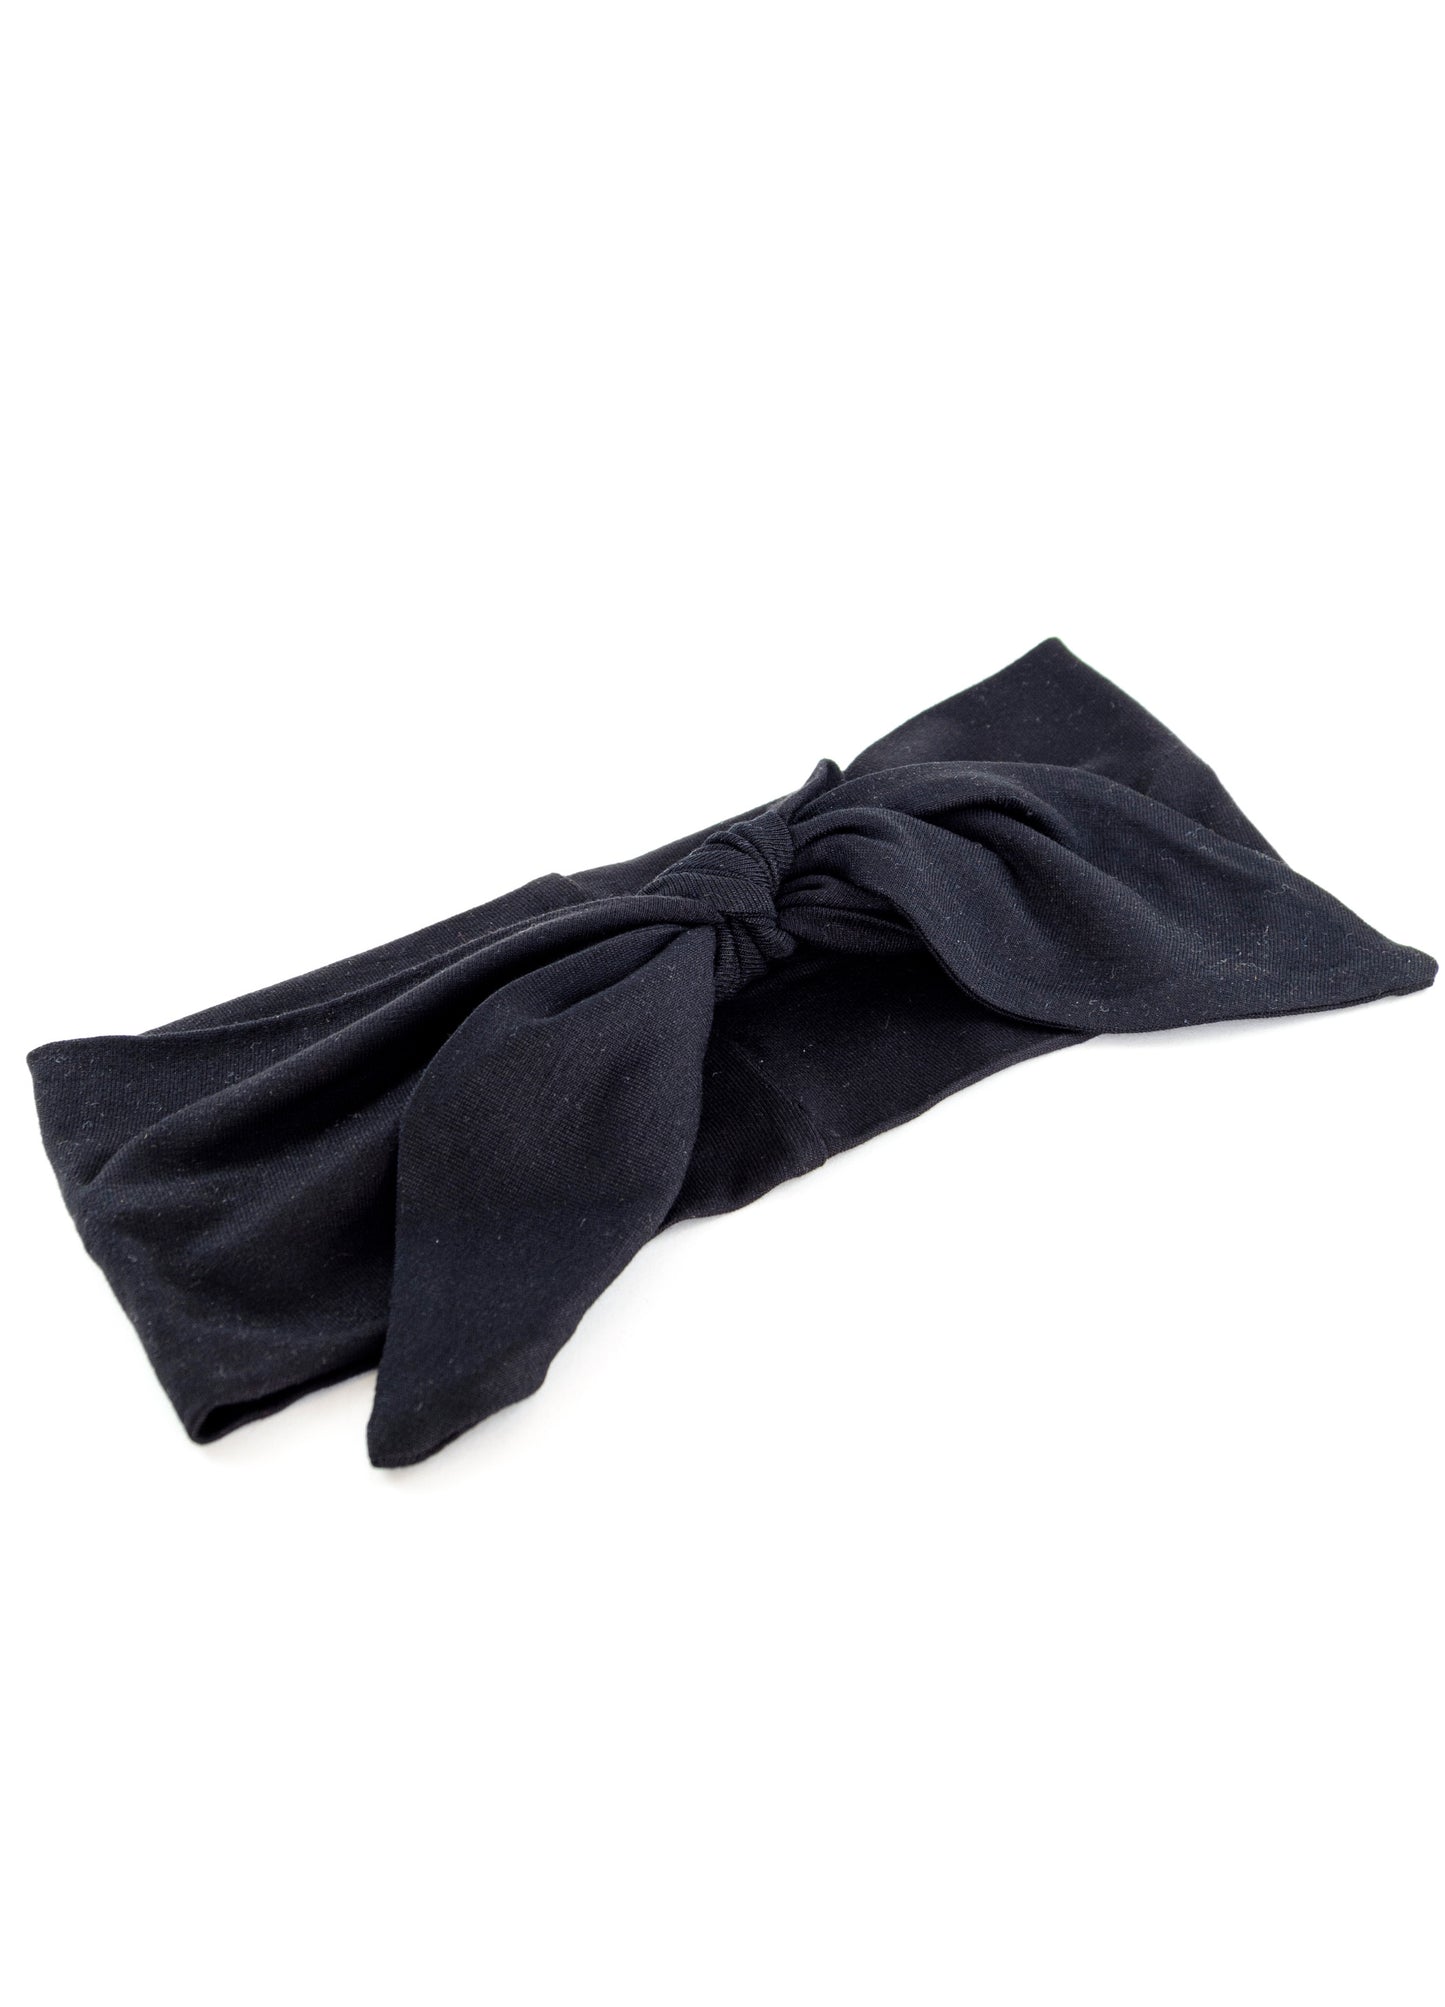 Juno tie headband in black